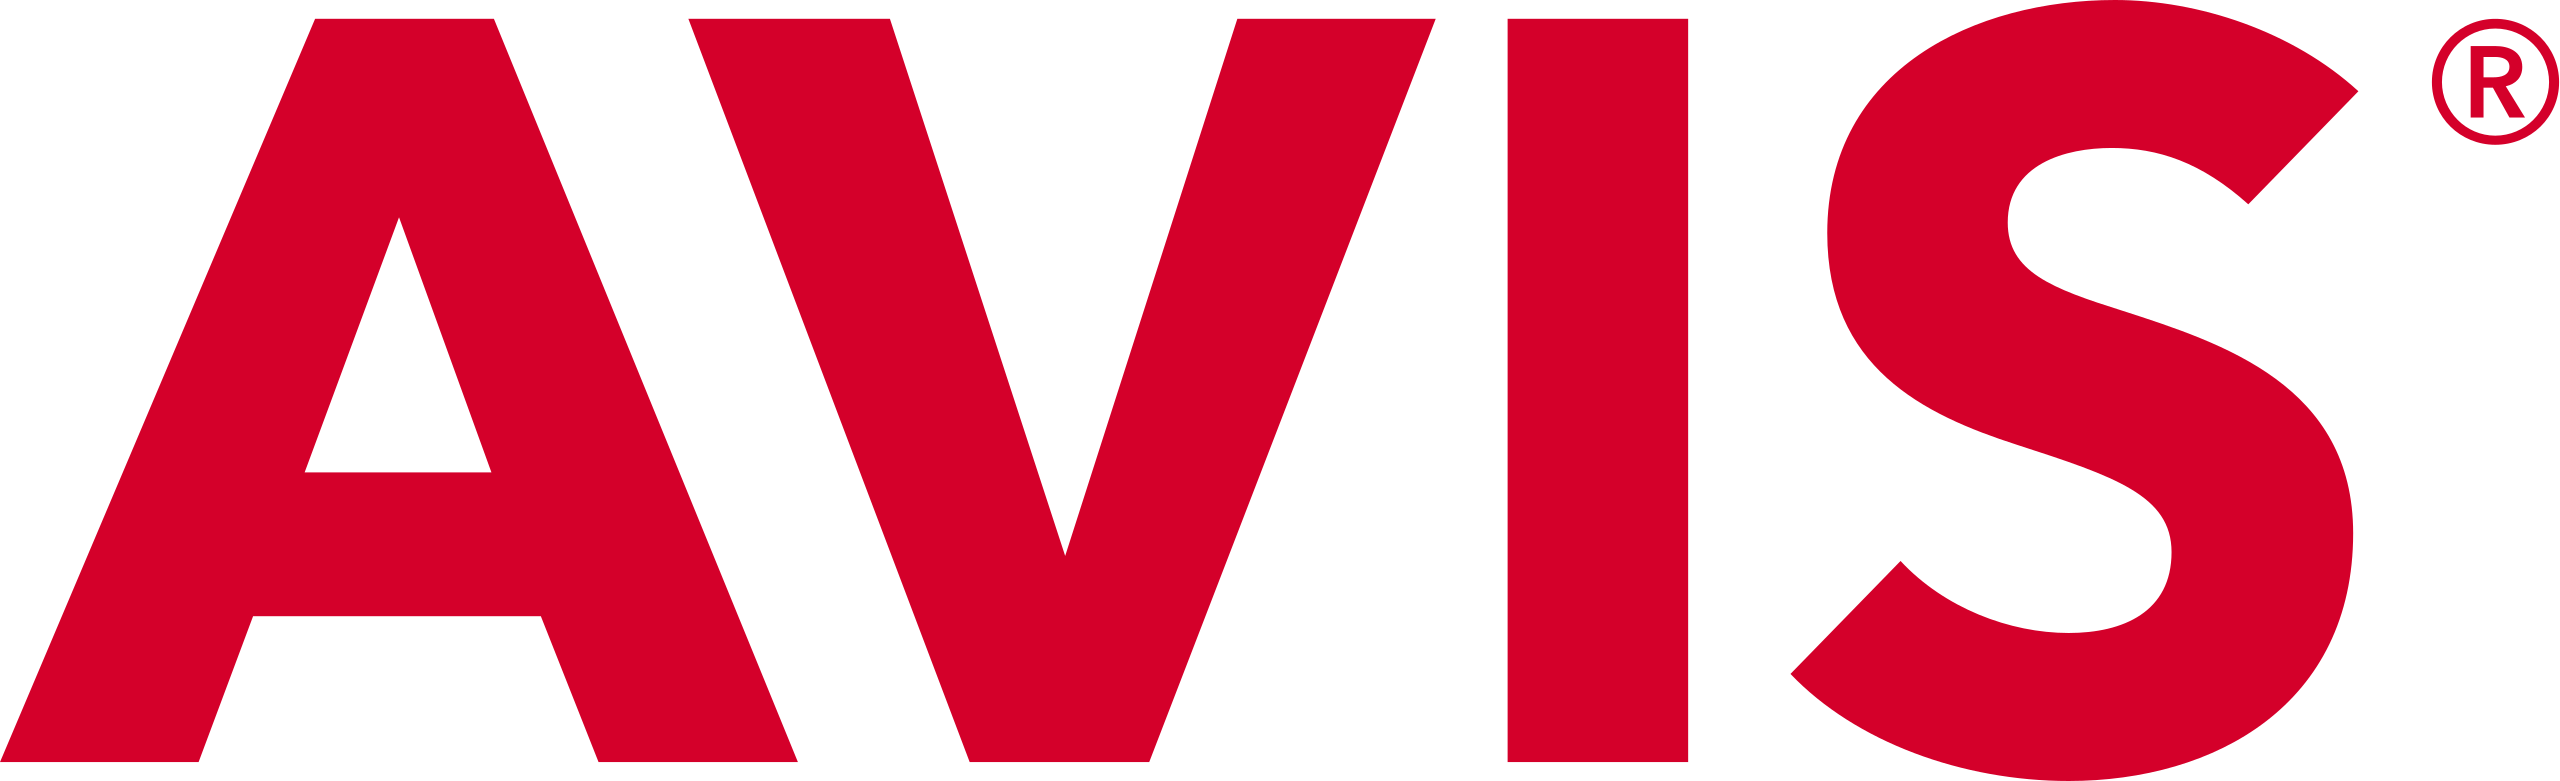 Avis Rental Logo